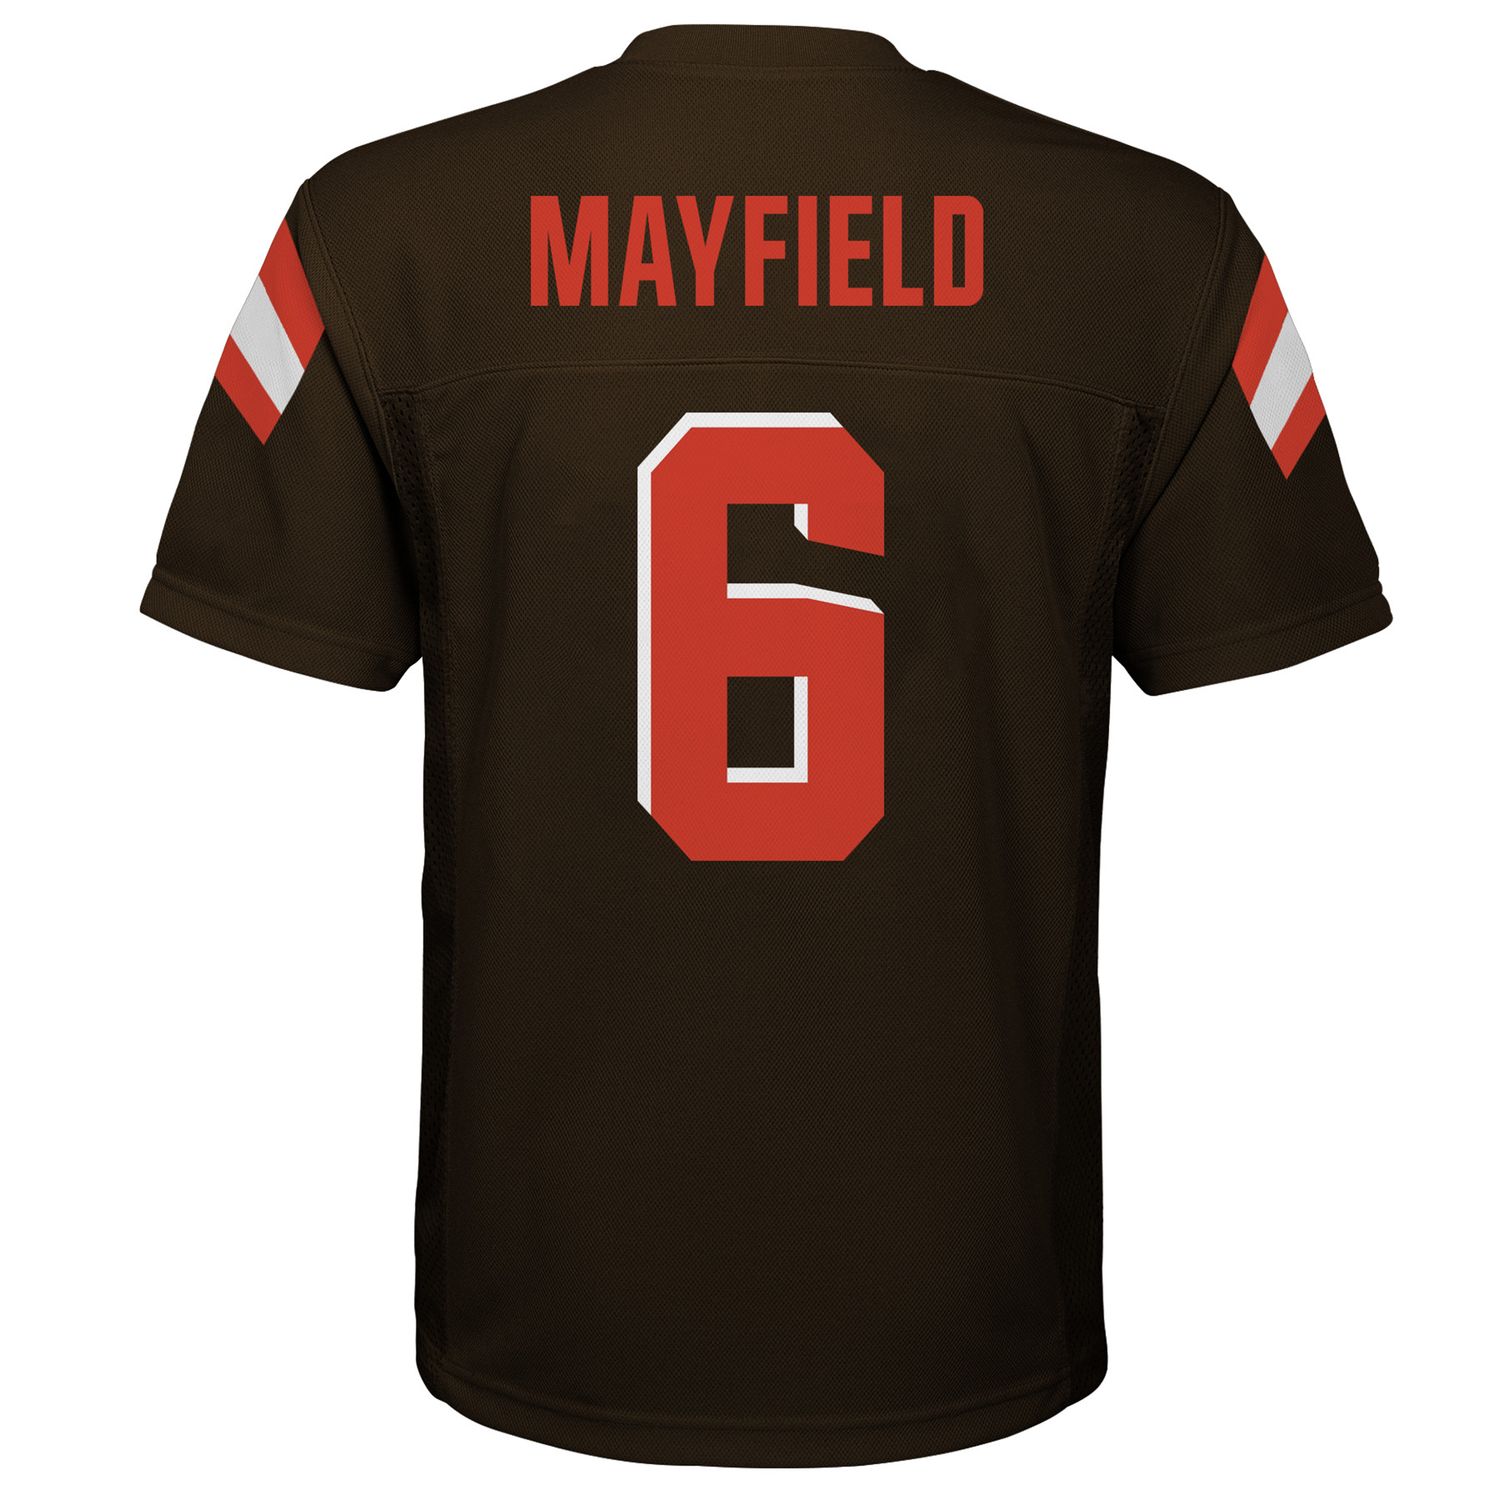 mayfield jersey